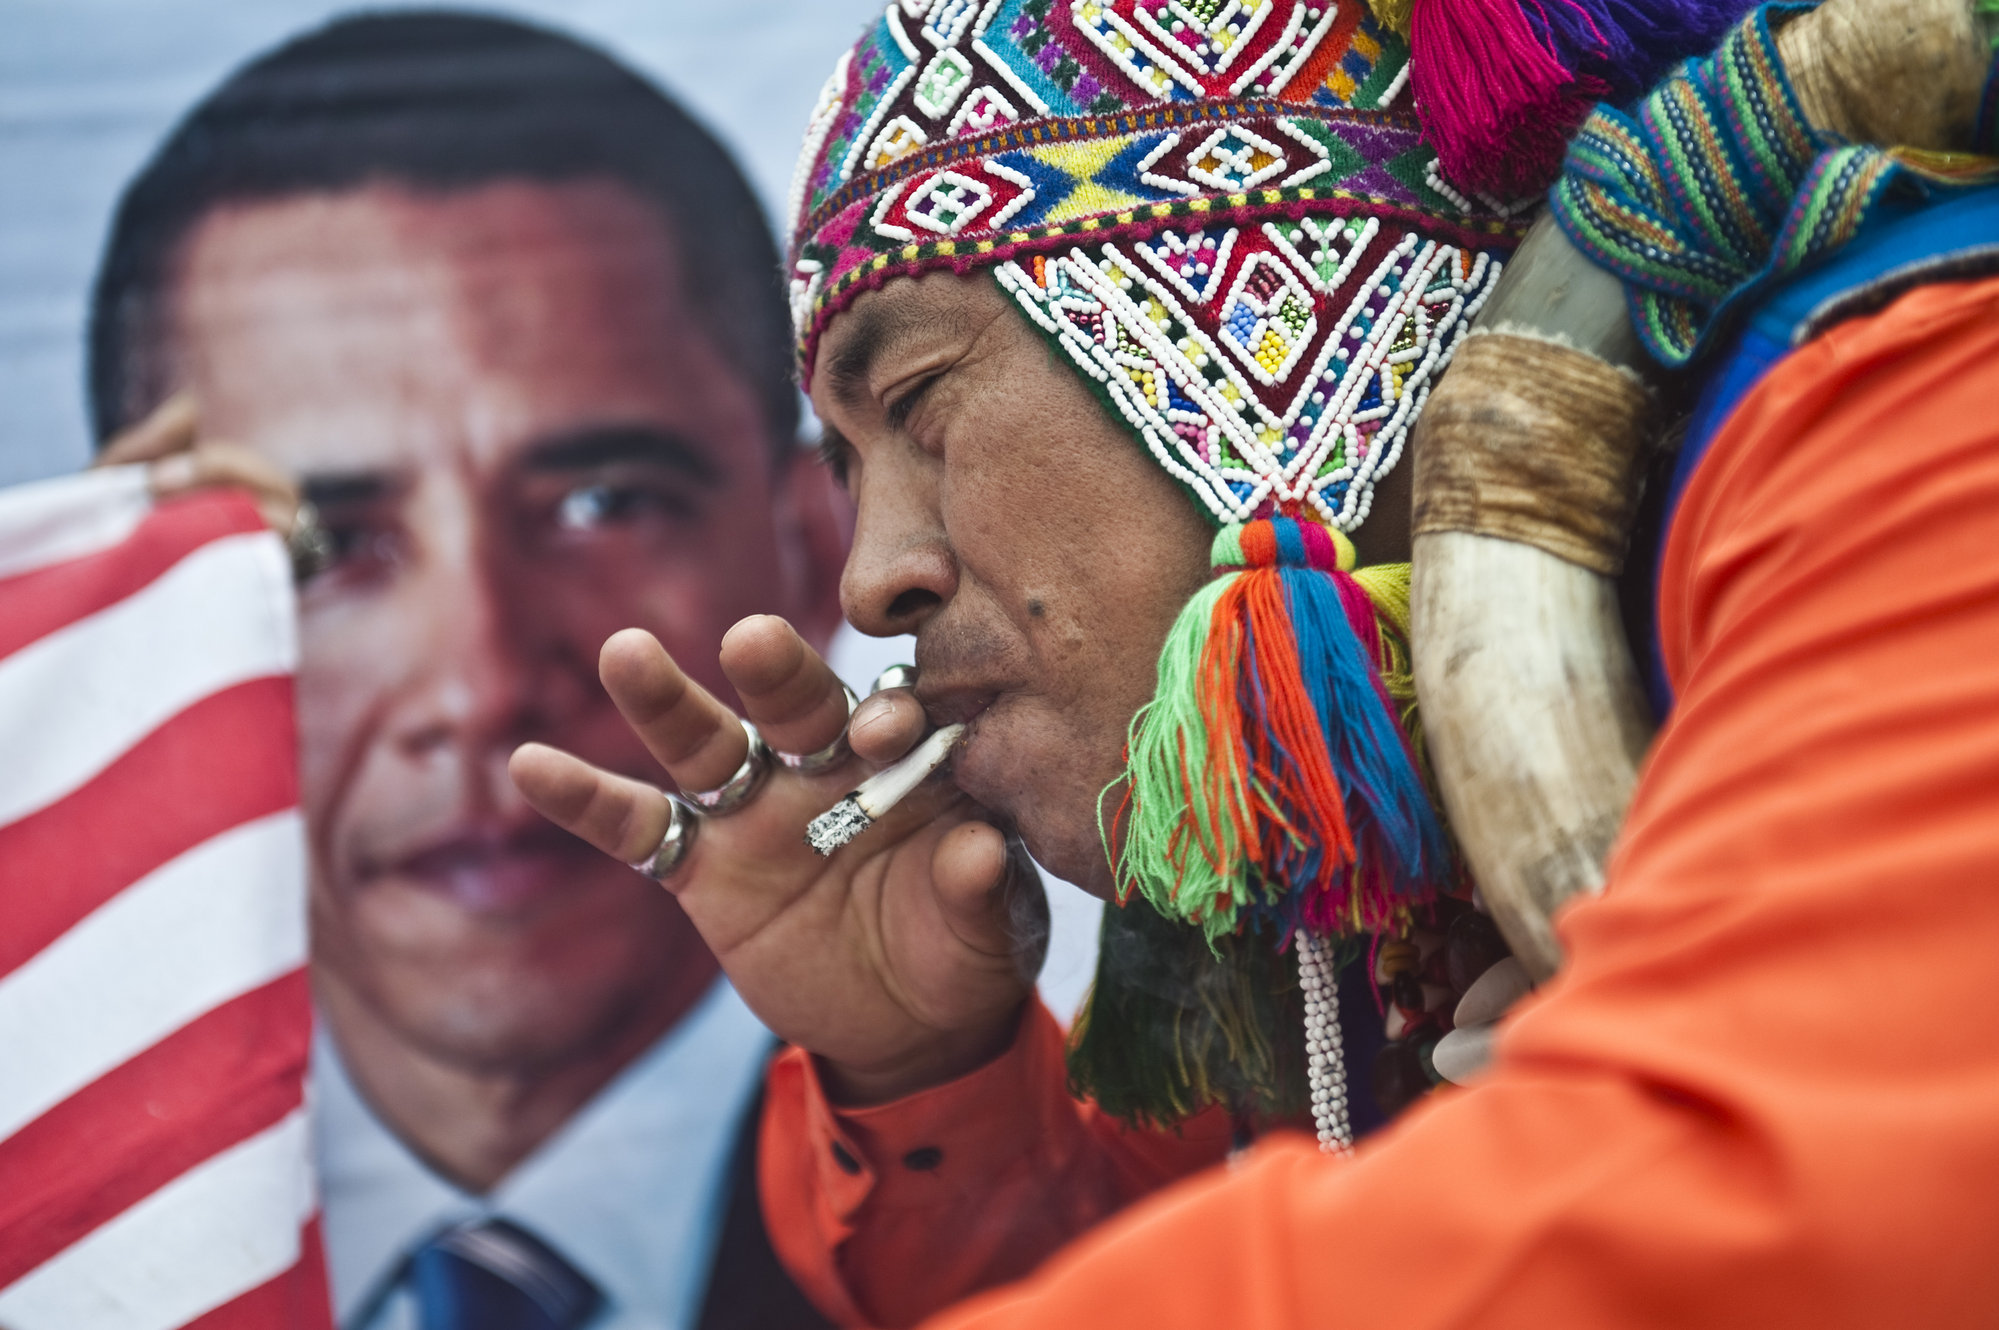 Un grupo chamanes peruanos auguran el triunfo de Obama